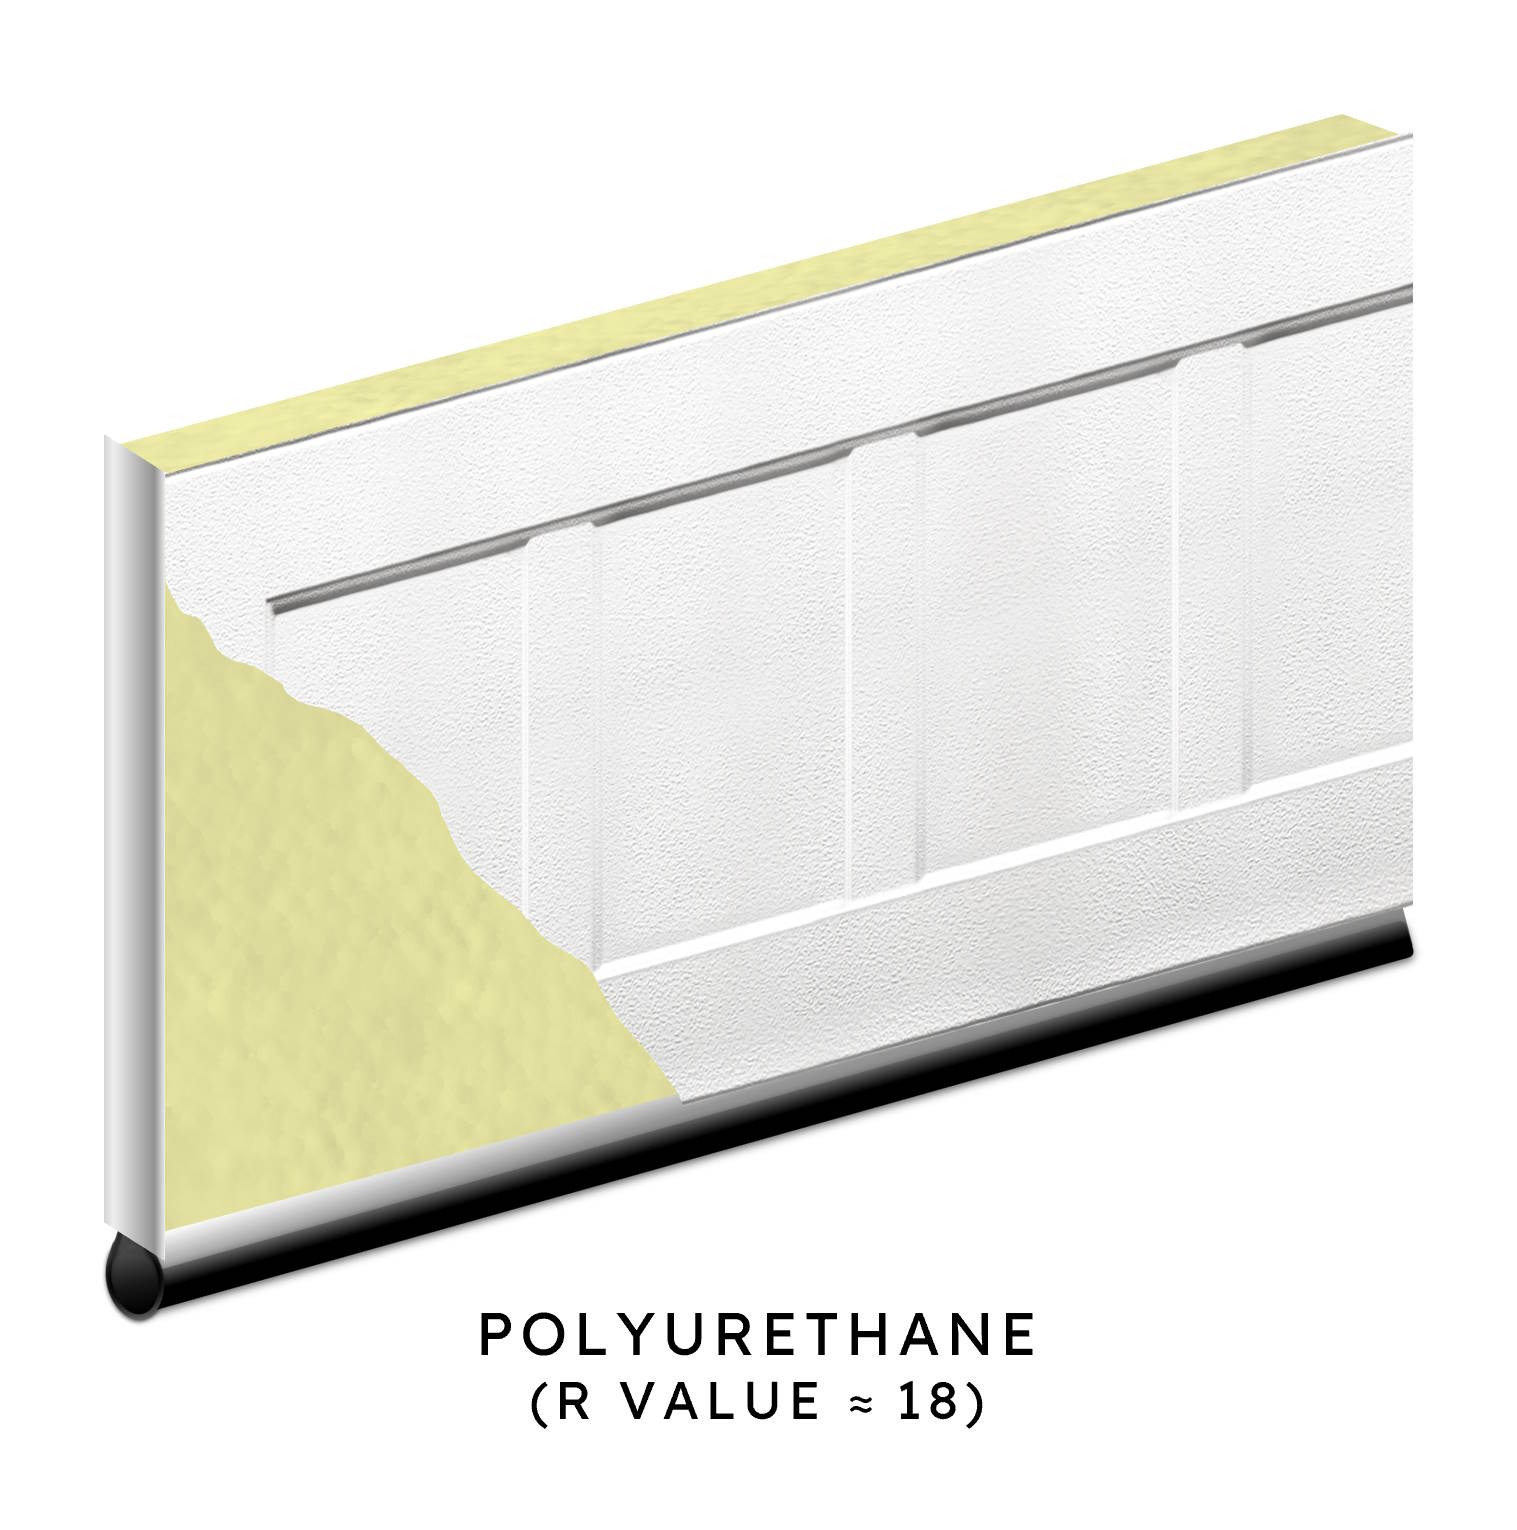 Shaker pencil panel cutaway showing polyurethane insulation